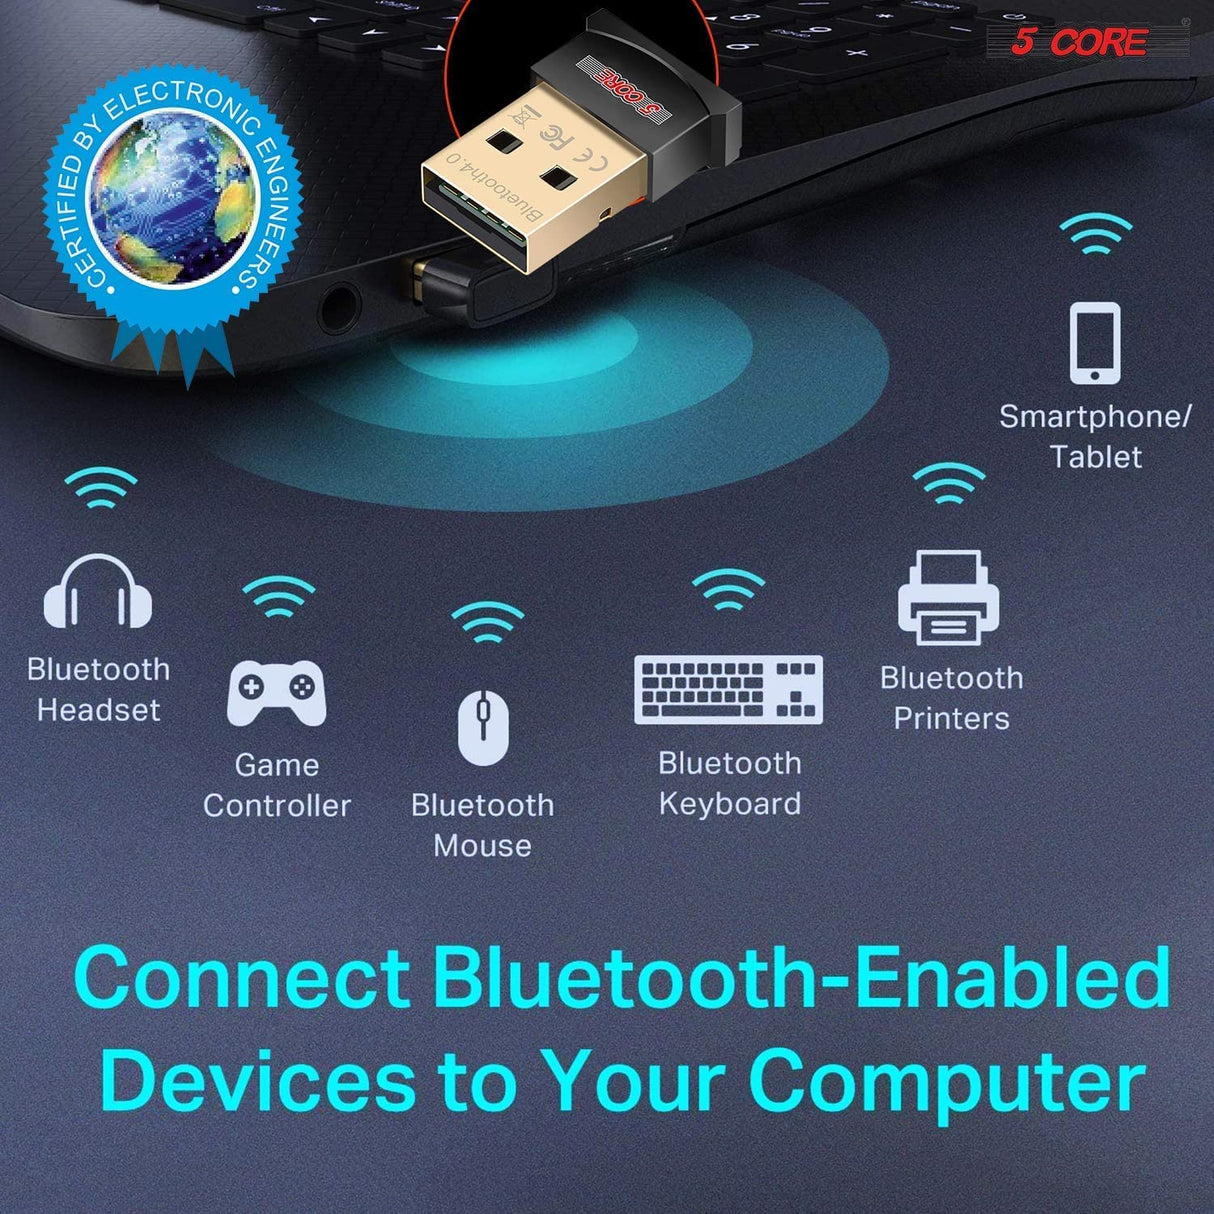 100 Pakkie Bluetooth 4.0 USB 2.0 CSR 4.0 Dongle Adapter vir PC LAPTOP WinXP 7 8 10 DONGLE BT 100PCS